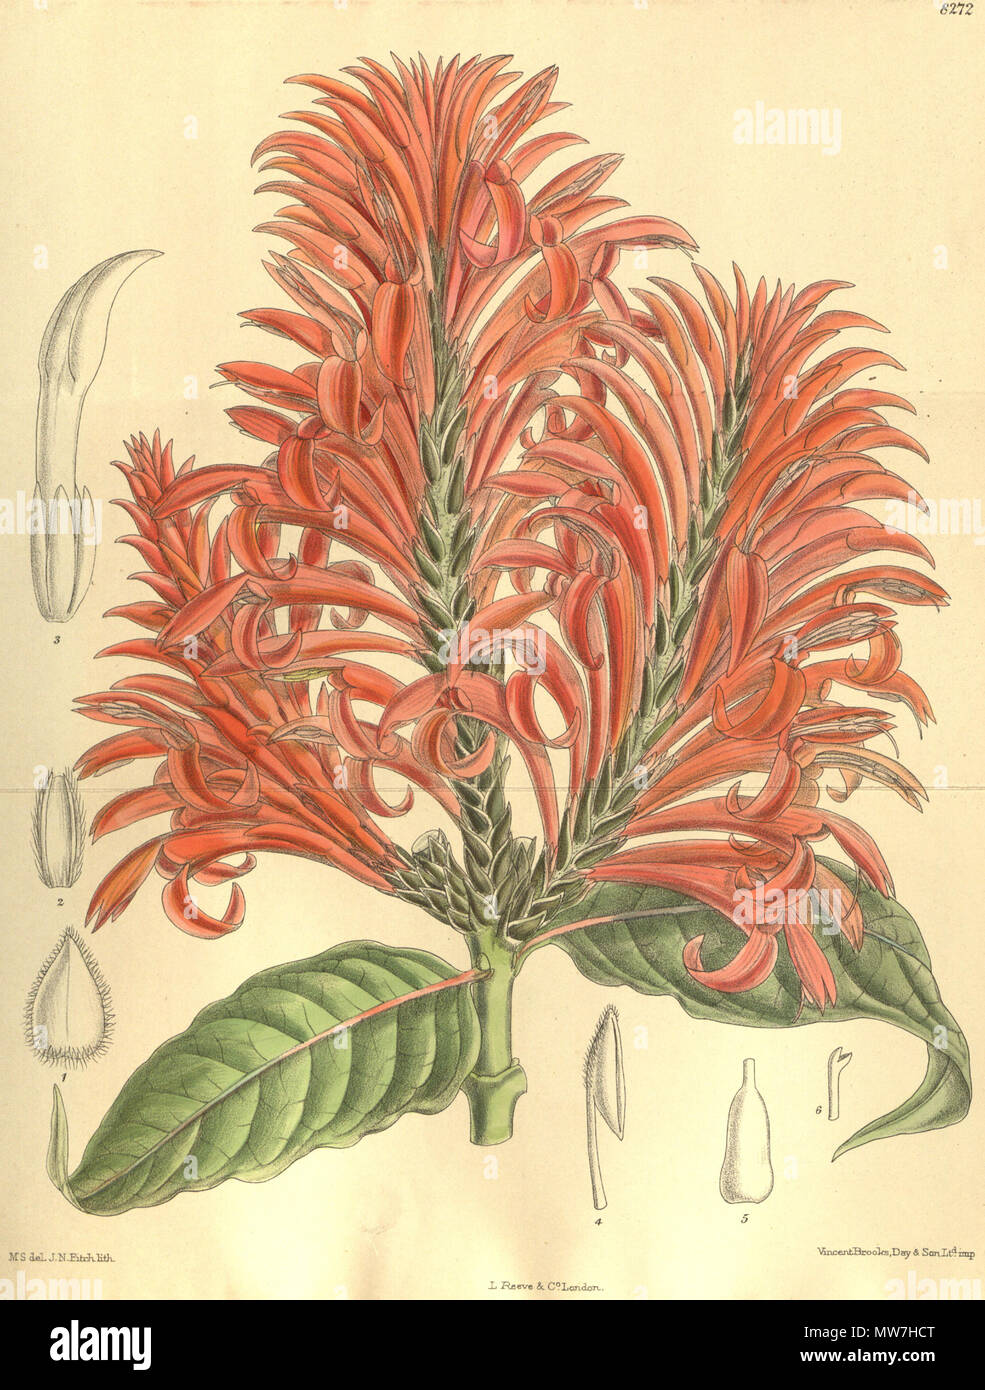 . Aphelandra tetragona, Acanthaceae . 1909. M.S. del., J.N.Fitch lith. 53 Aphelandra tetragona 135-8272 Stock Photo